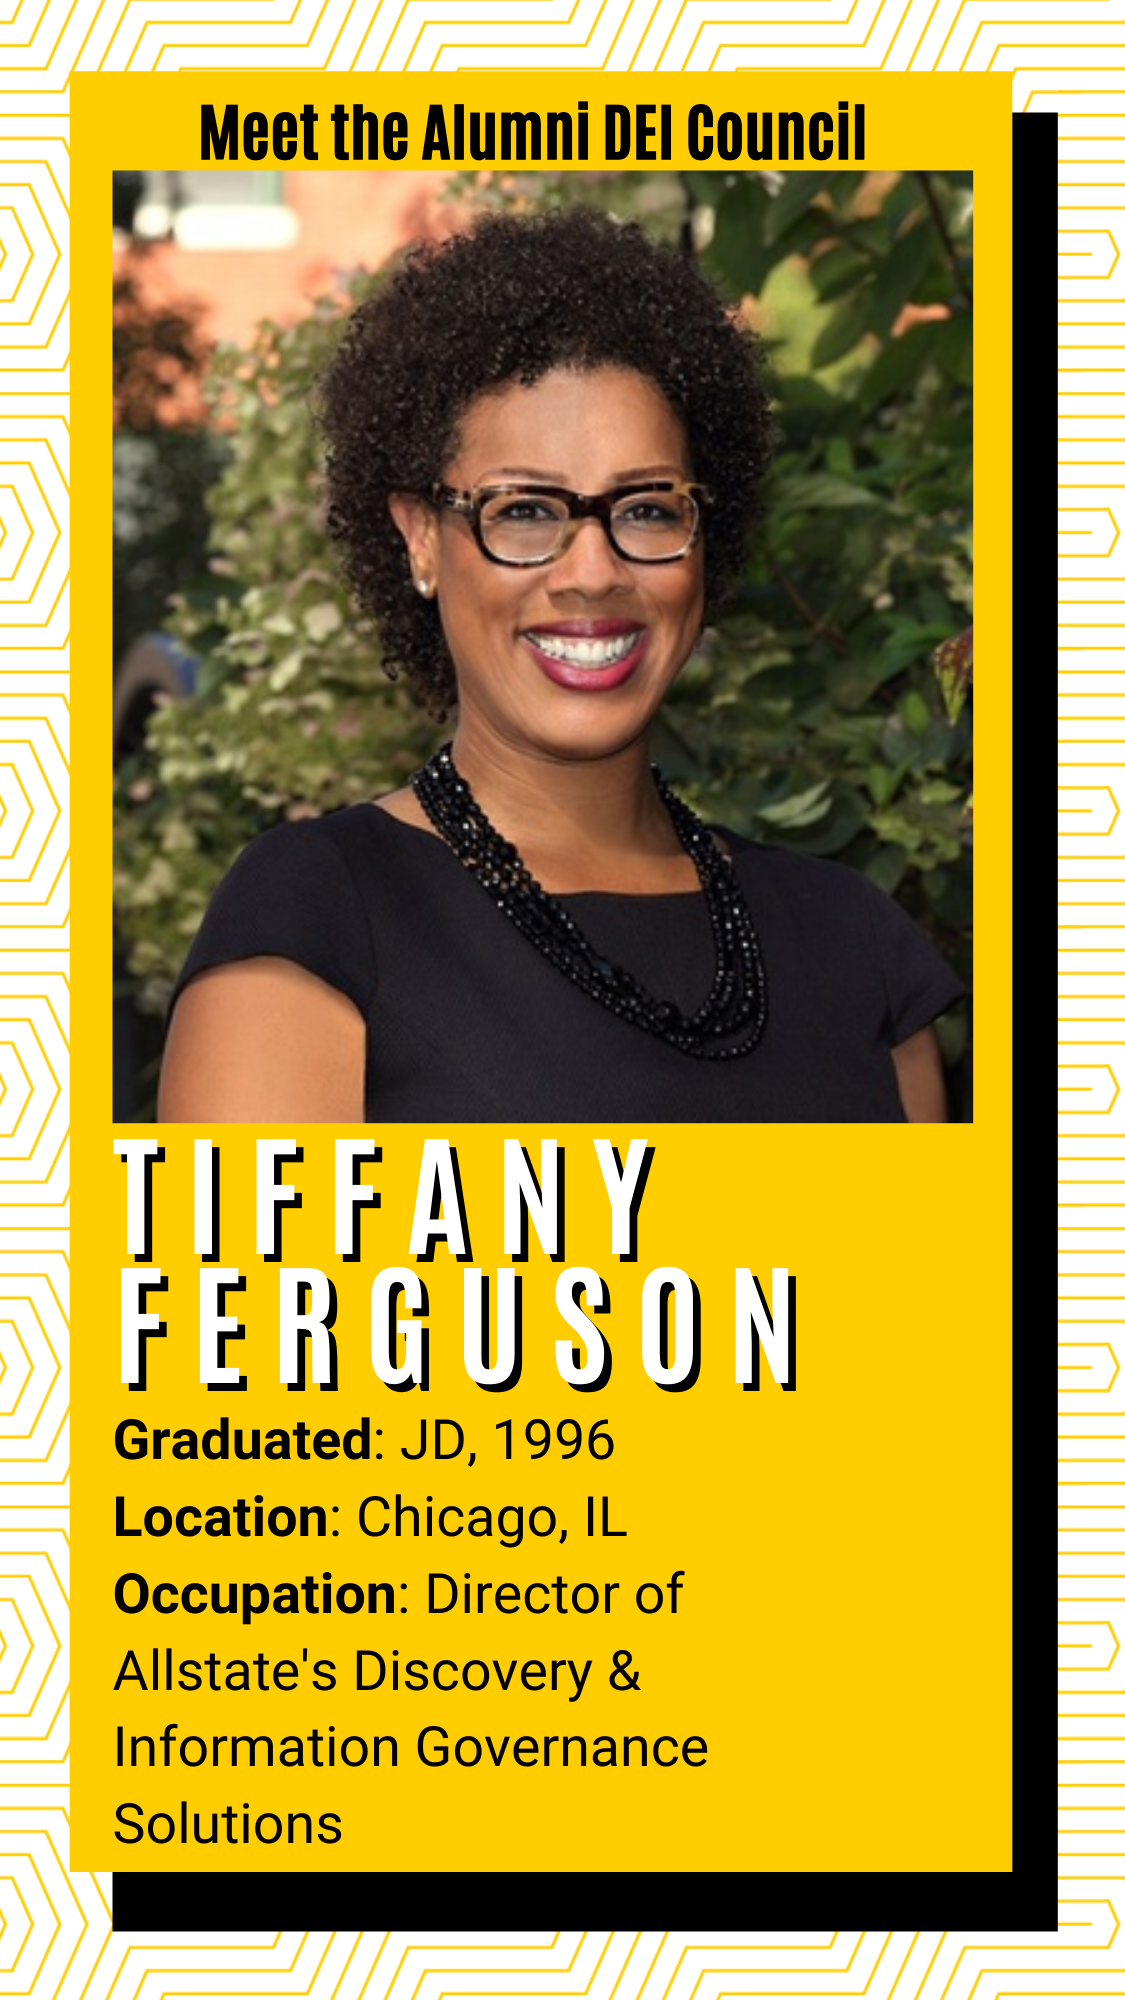 Meet the alumni DEI Council - Tiffany Ferguson